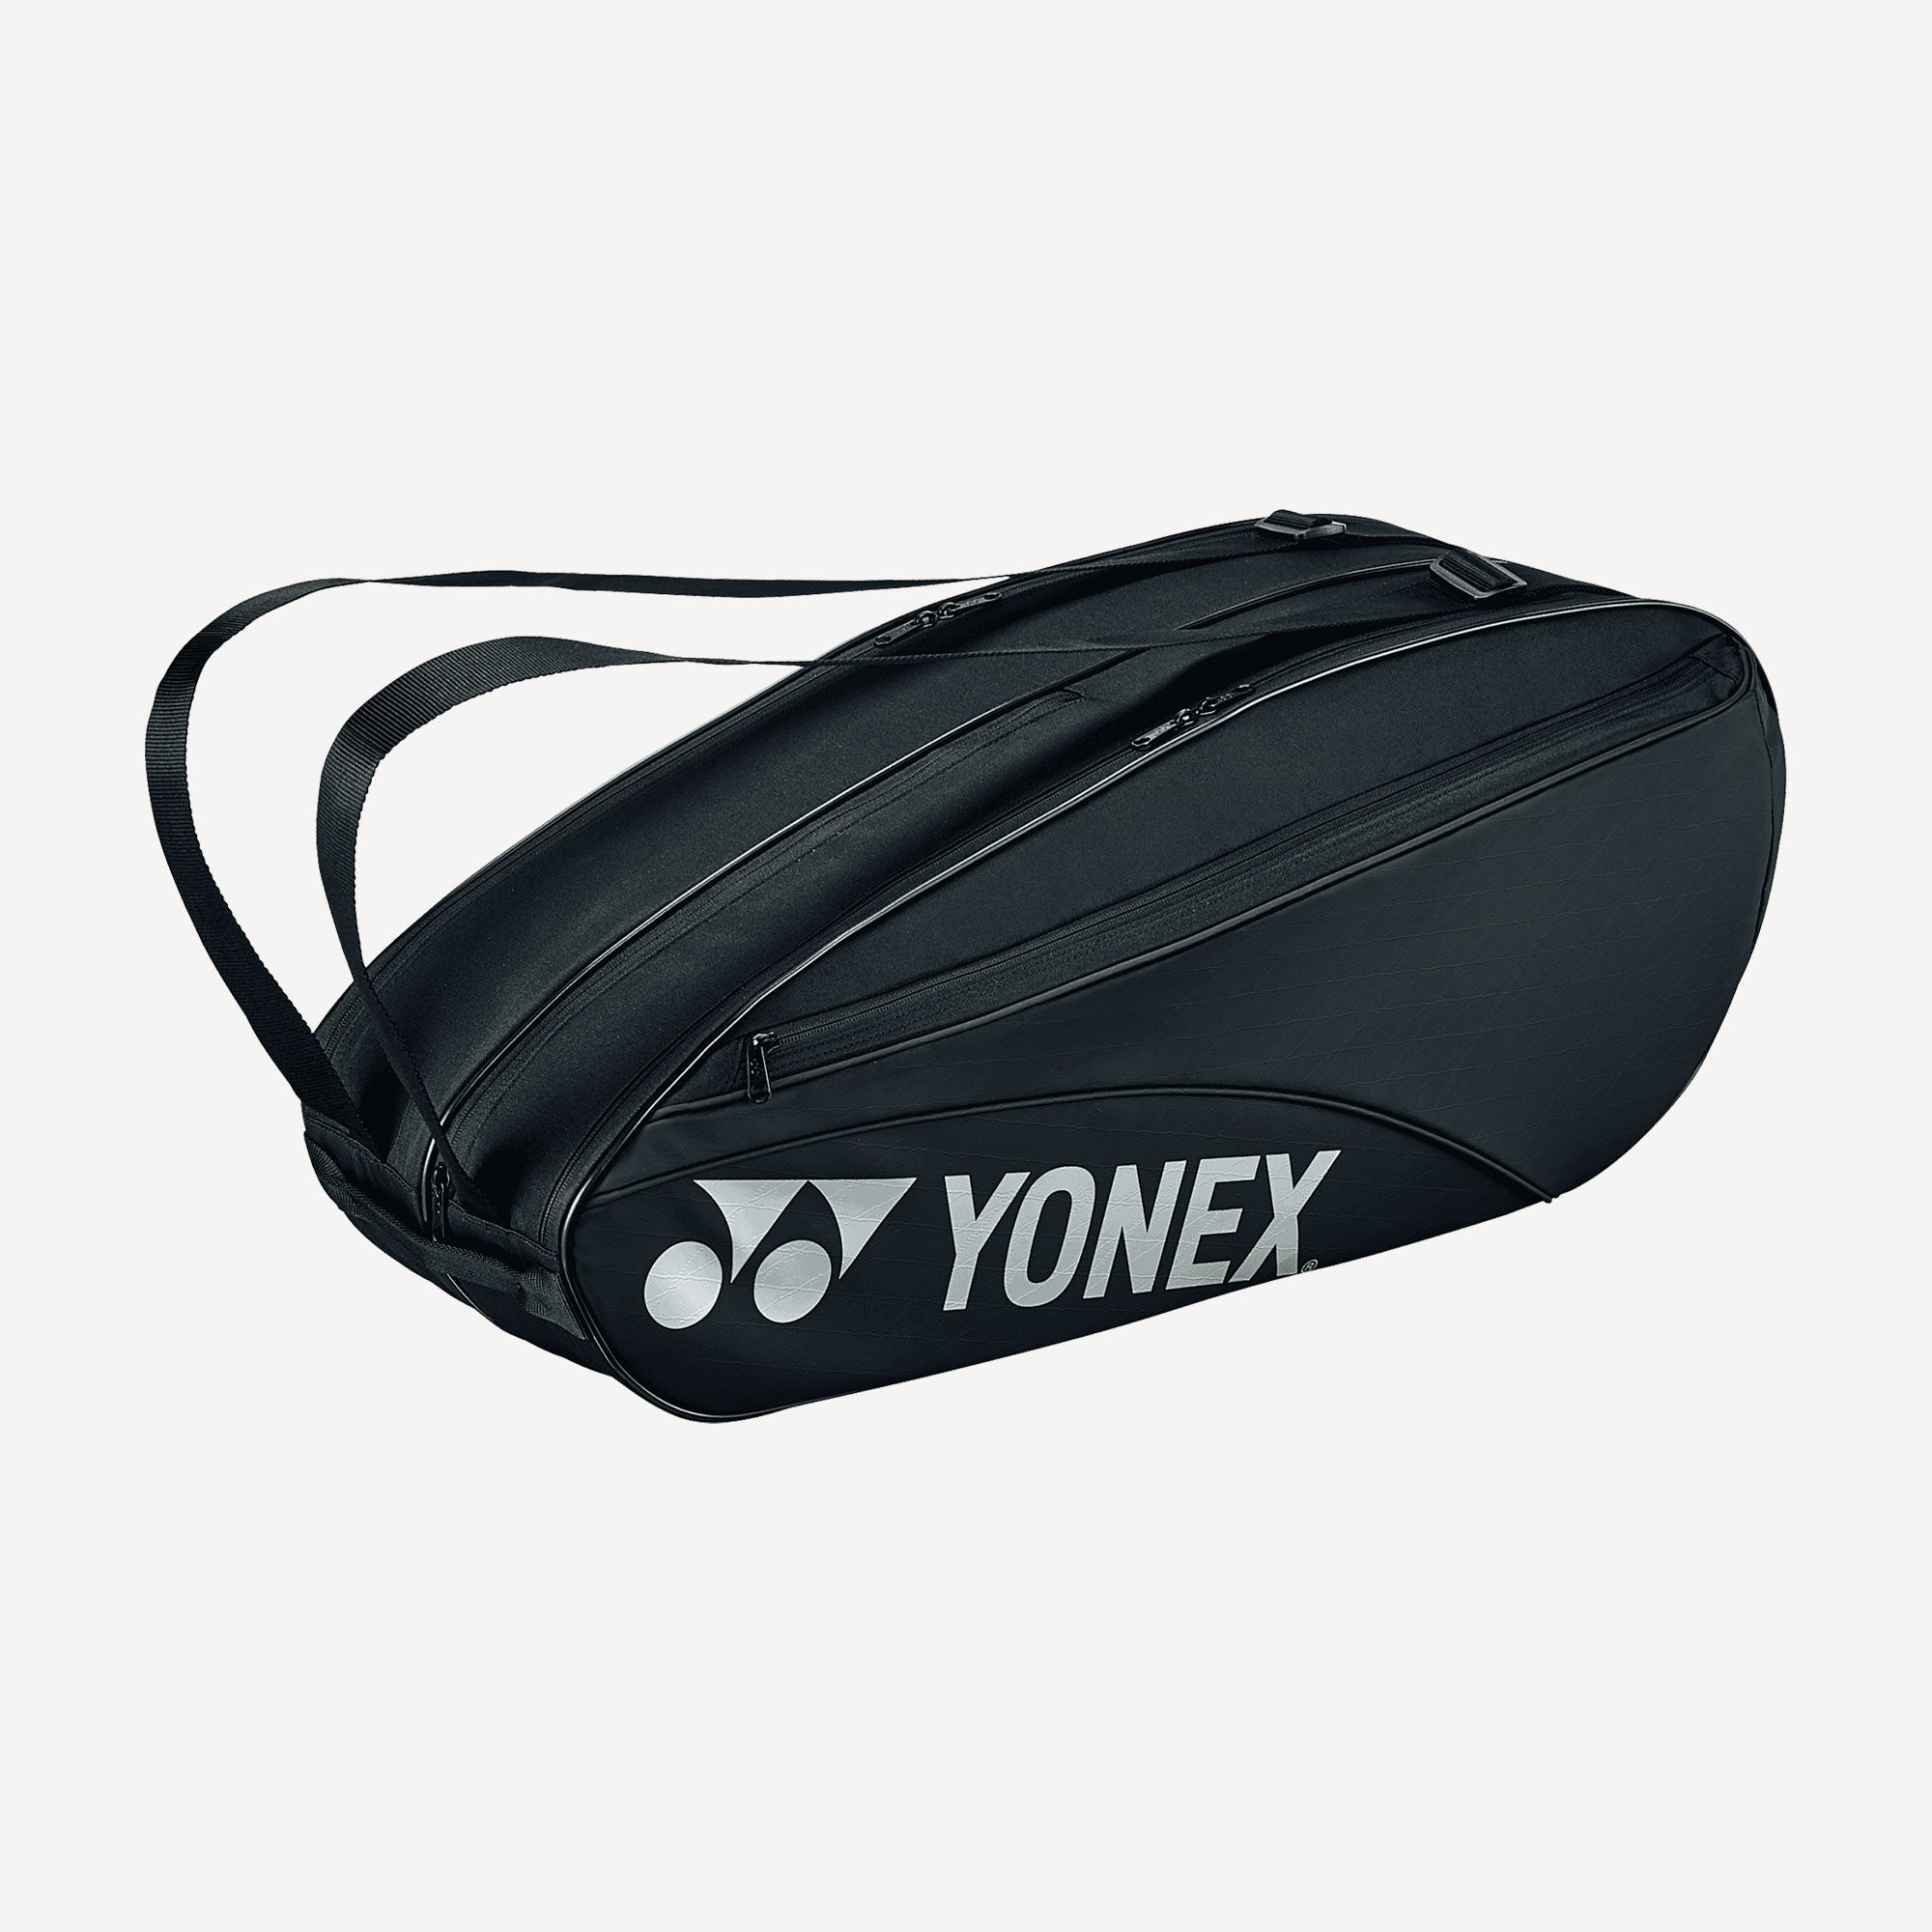 Yonex Team 6 Racket Tennis Bag - Black (1)